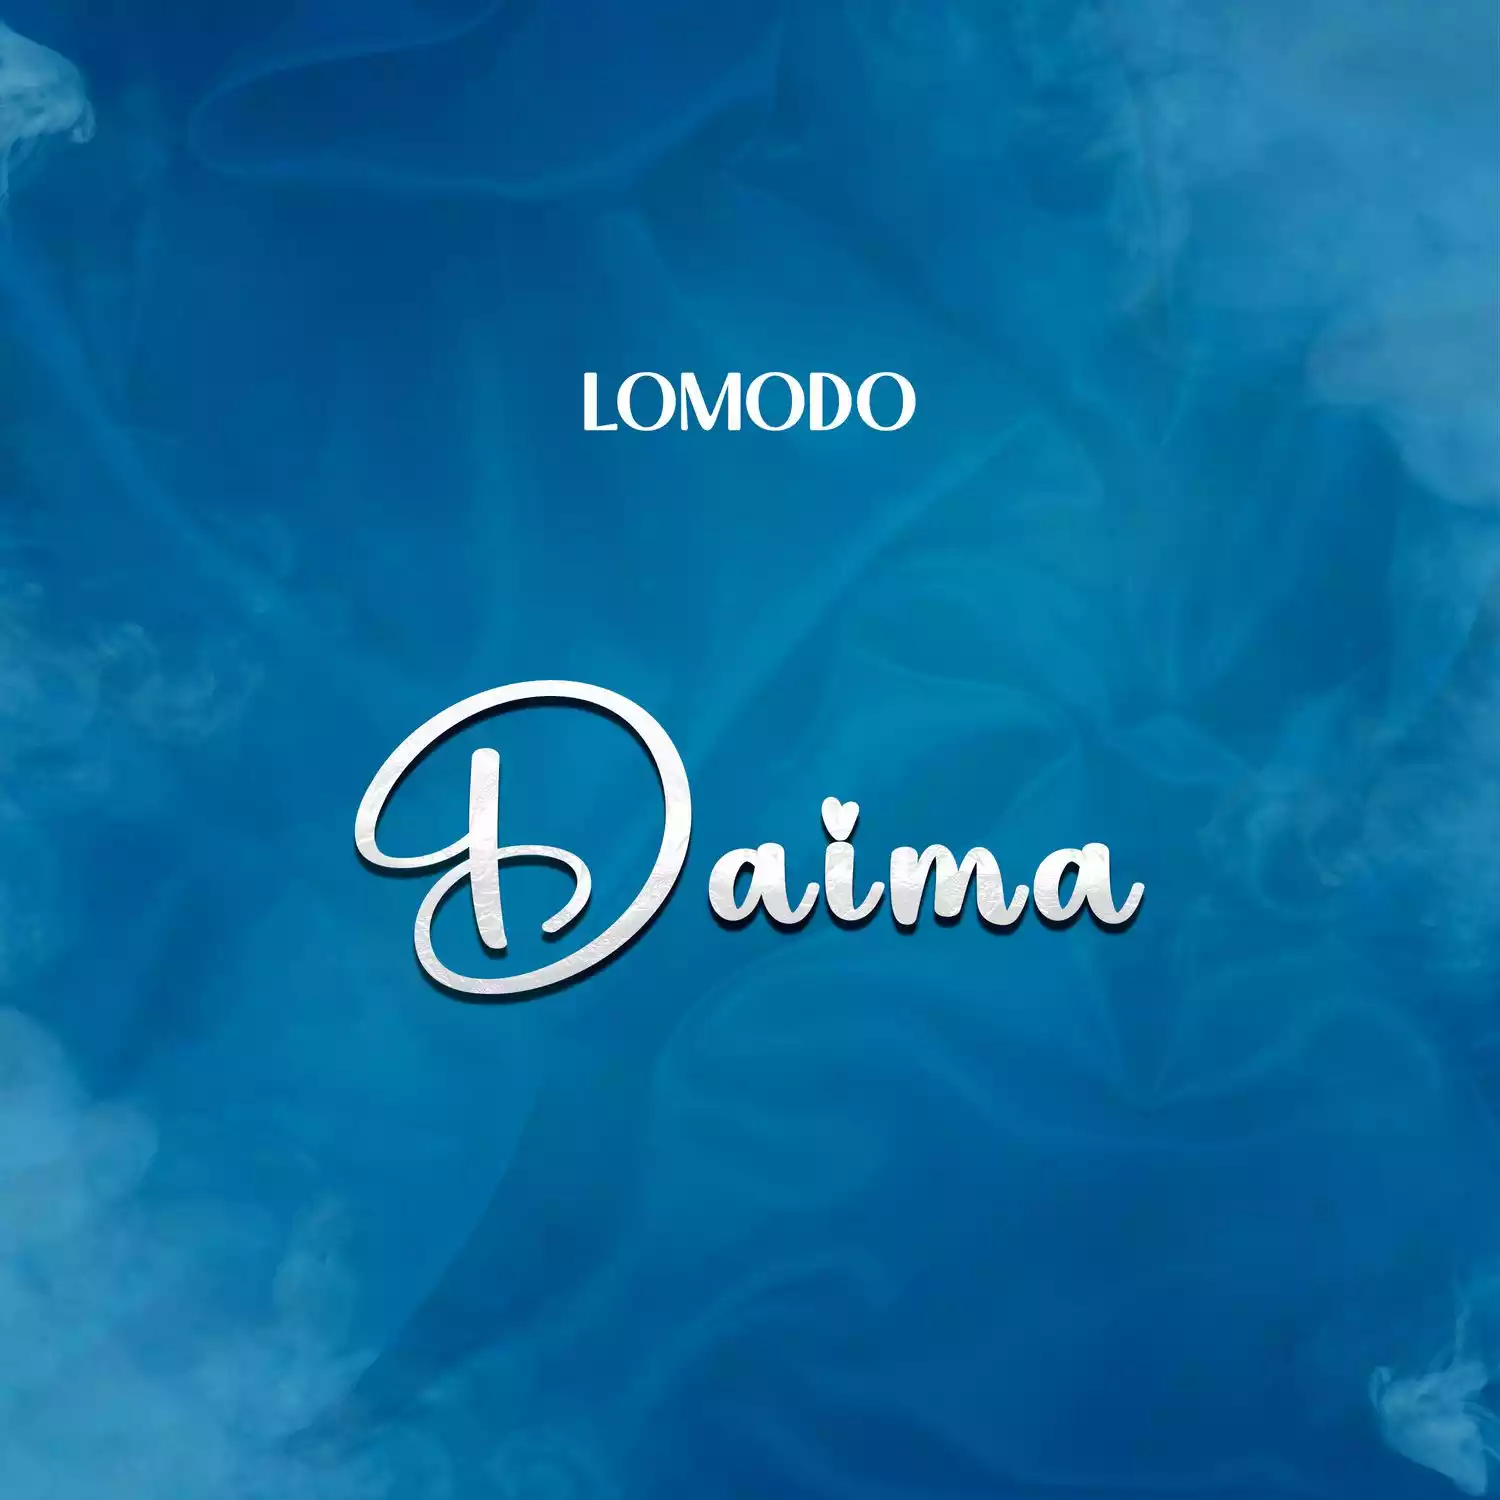 Lomodo Daima Mp3 Download